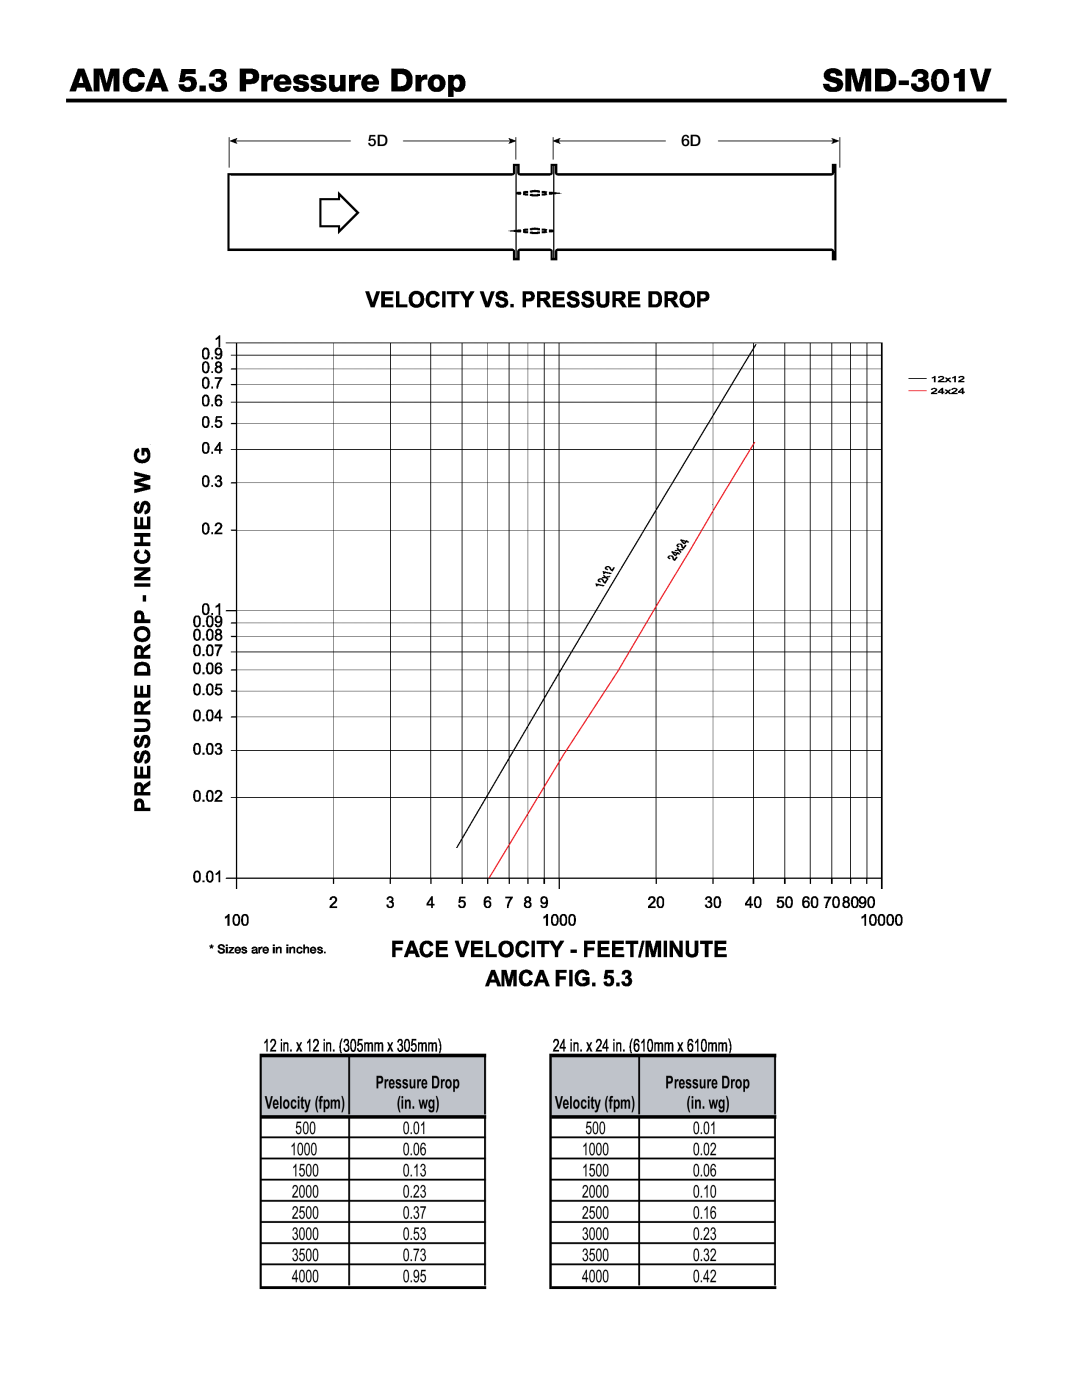 Greenheck Fan SMD-301V dimensions AMCA 5.3 Pressure Drop, in. wg, Velocity fpm 